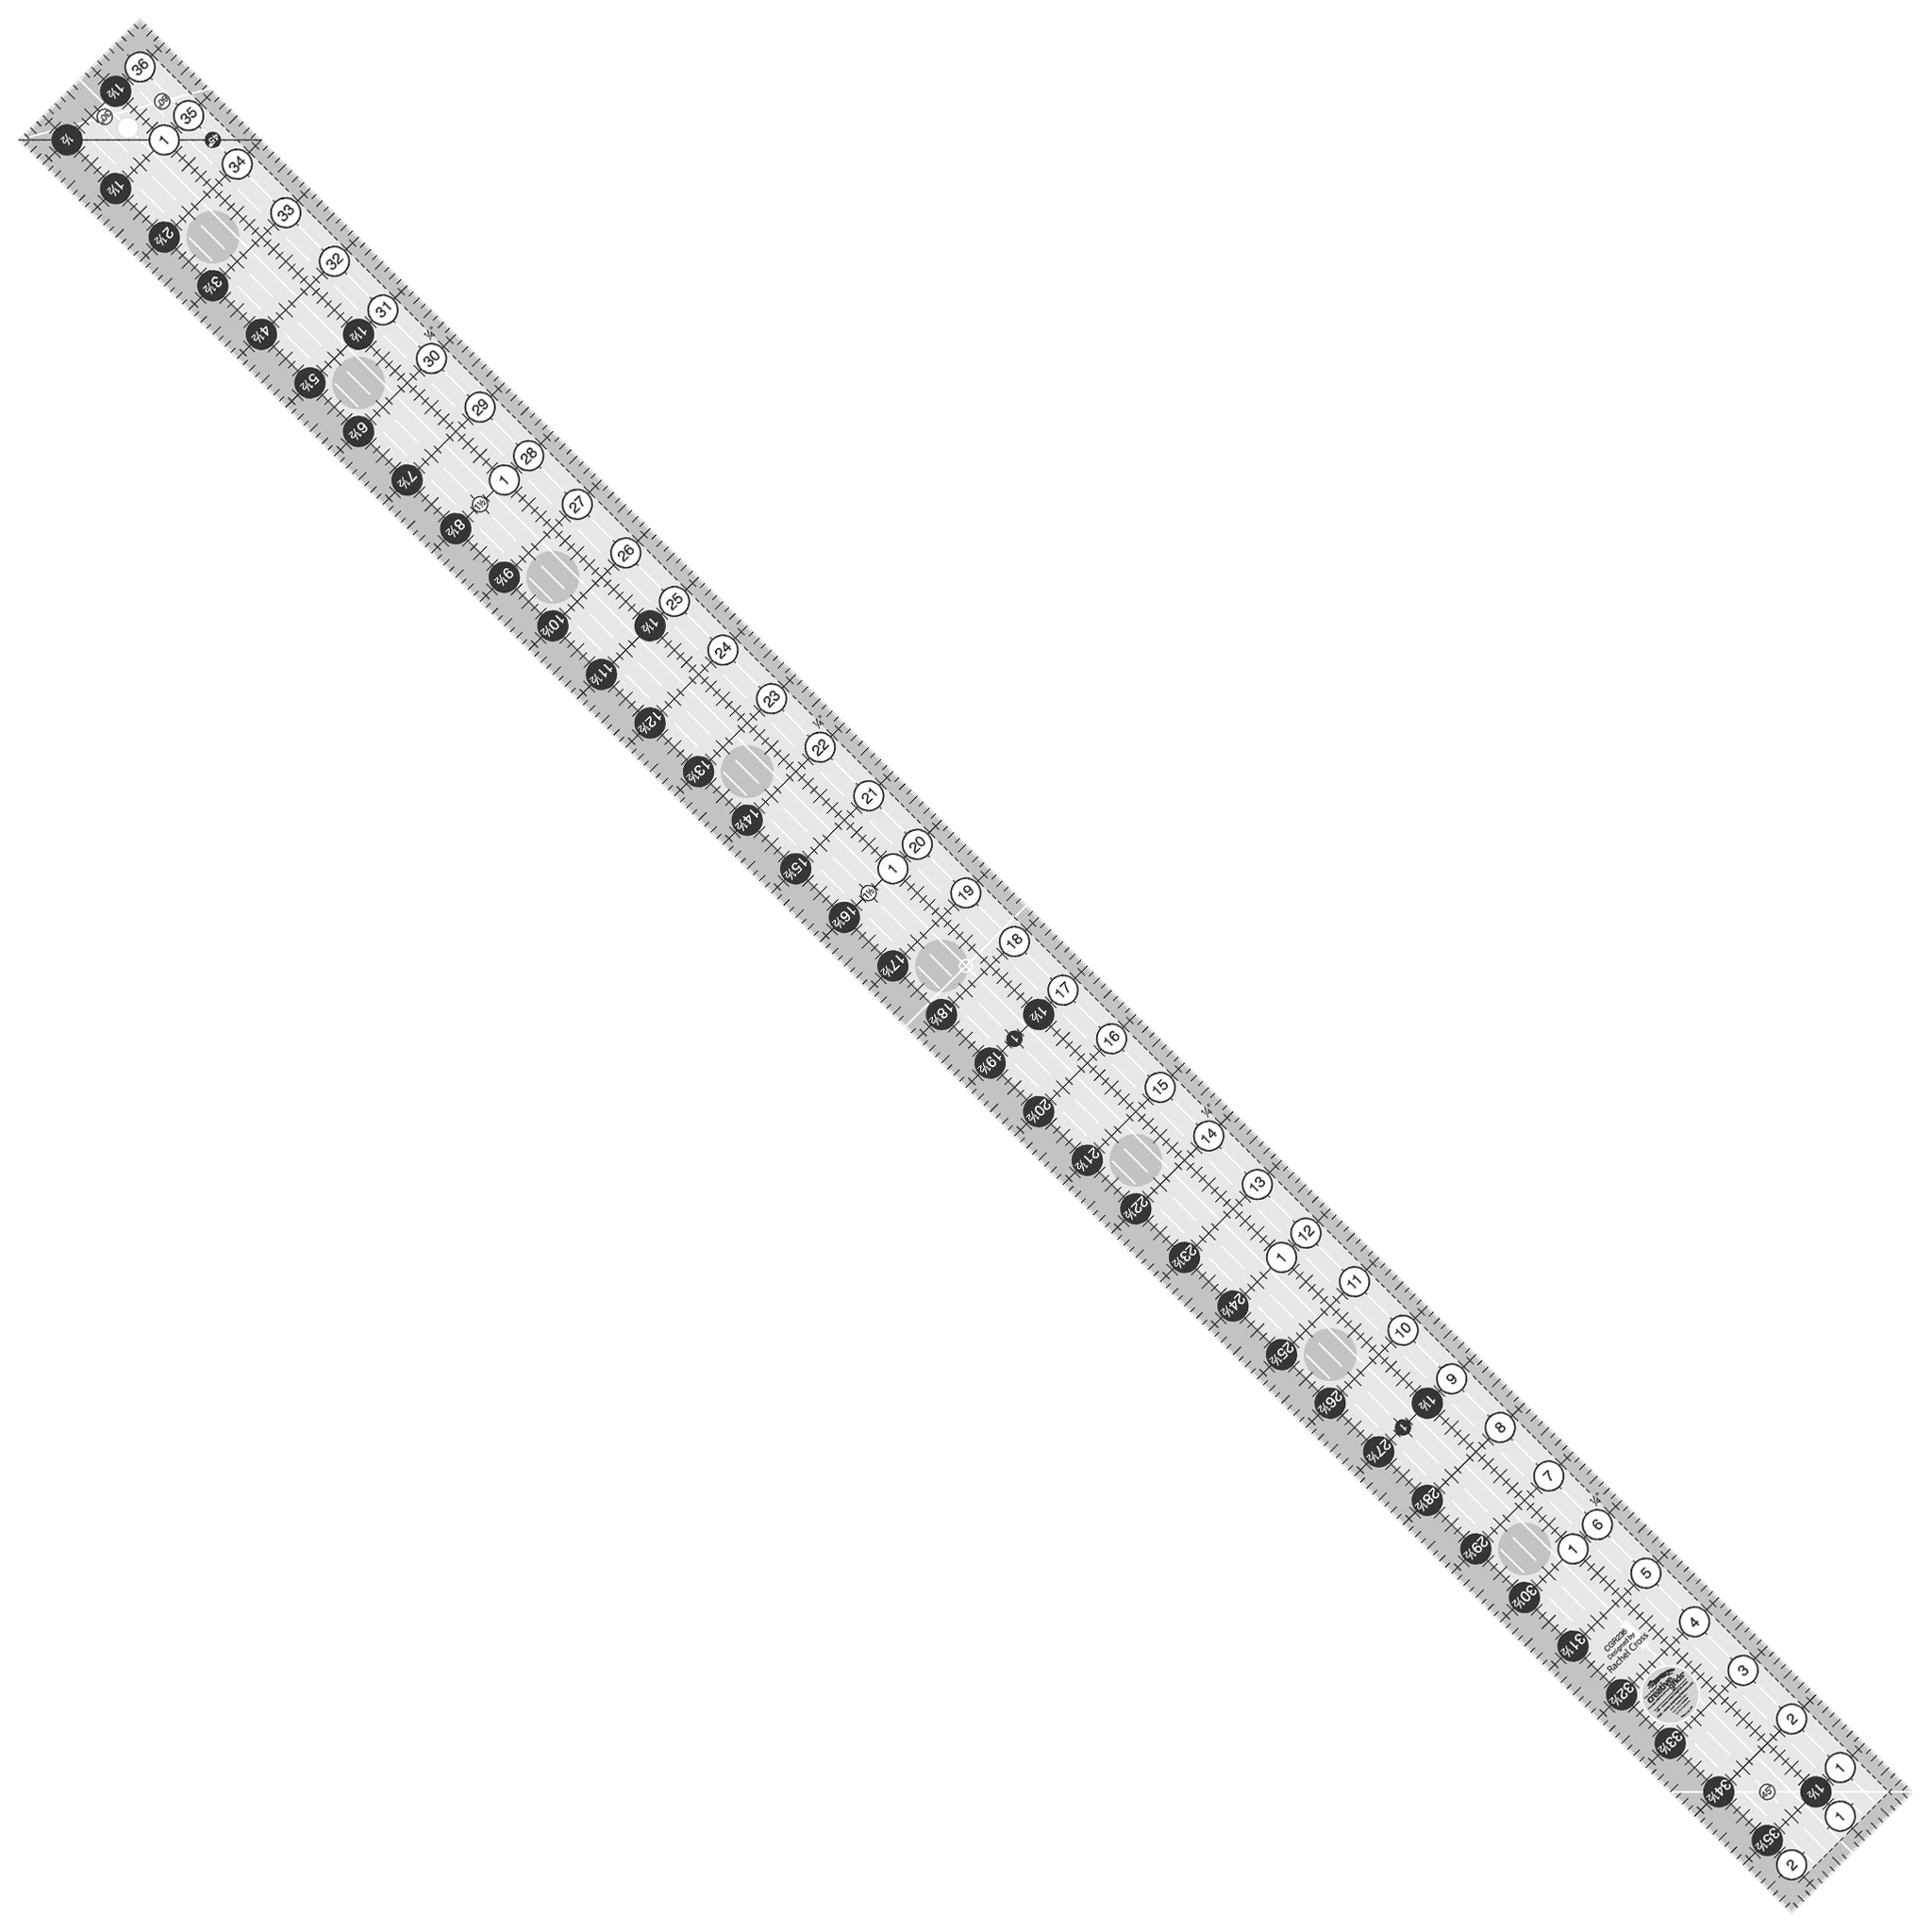 Creative Grids 2-1/2-Inch X 36-1/2-Inch Yardstick Quilt Ruler (CGR236)